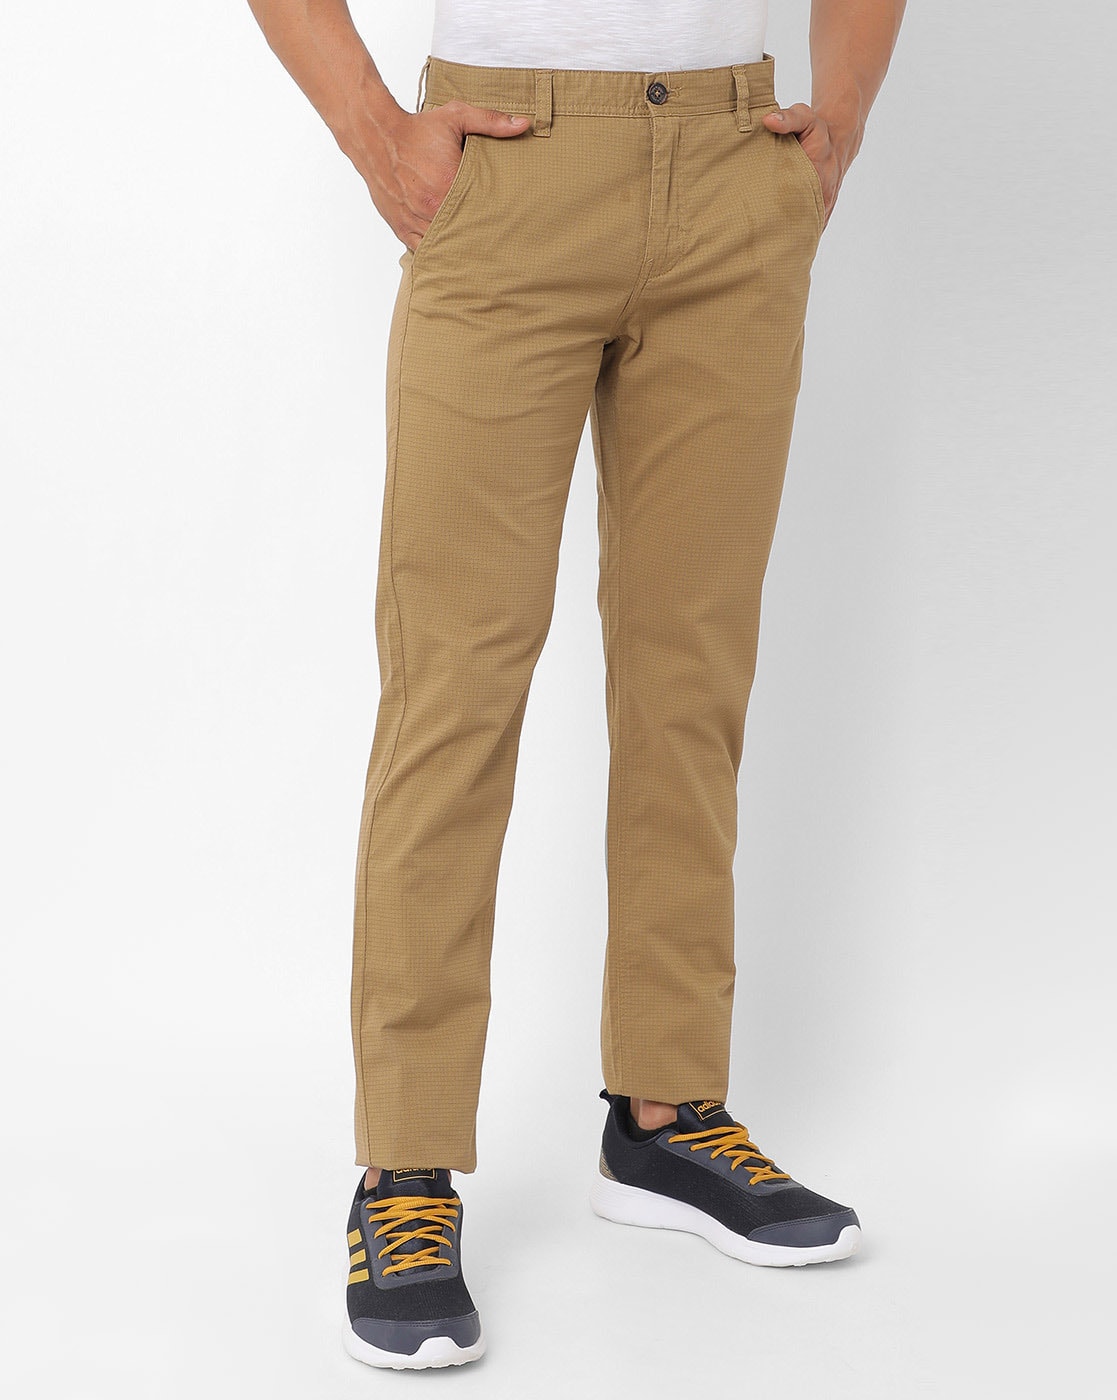 Buy Men Khaki Solid Slim Fit Trousers Online  887979  Van Heusen